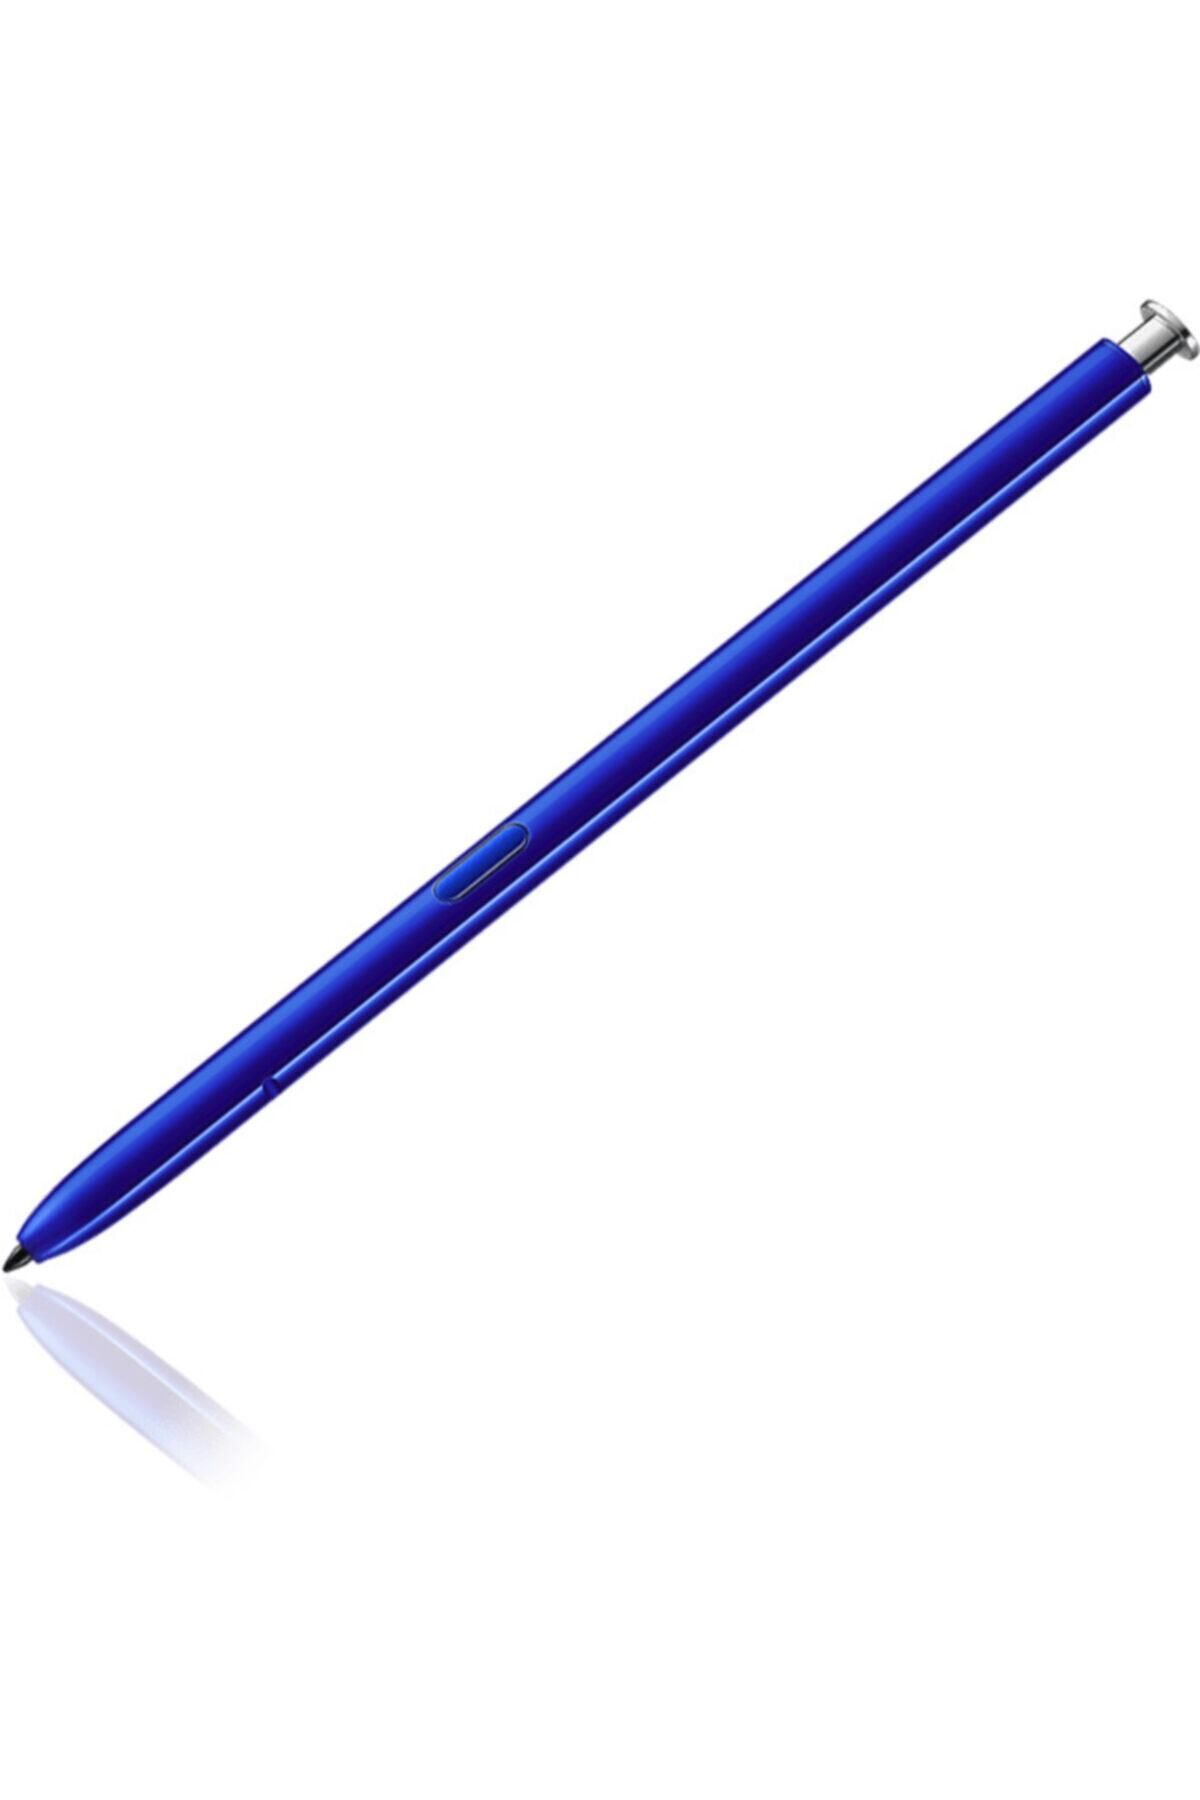 Syronix Samsung Galaxy Note 10+ Plus Pen Mavi